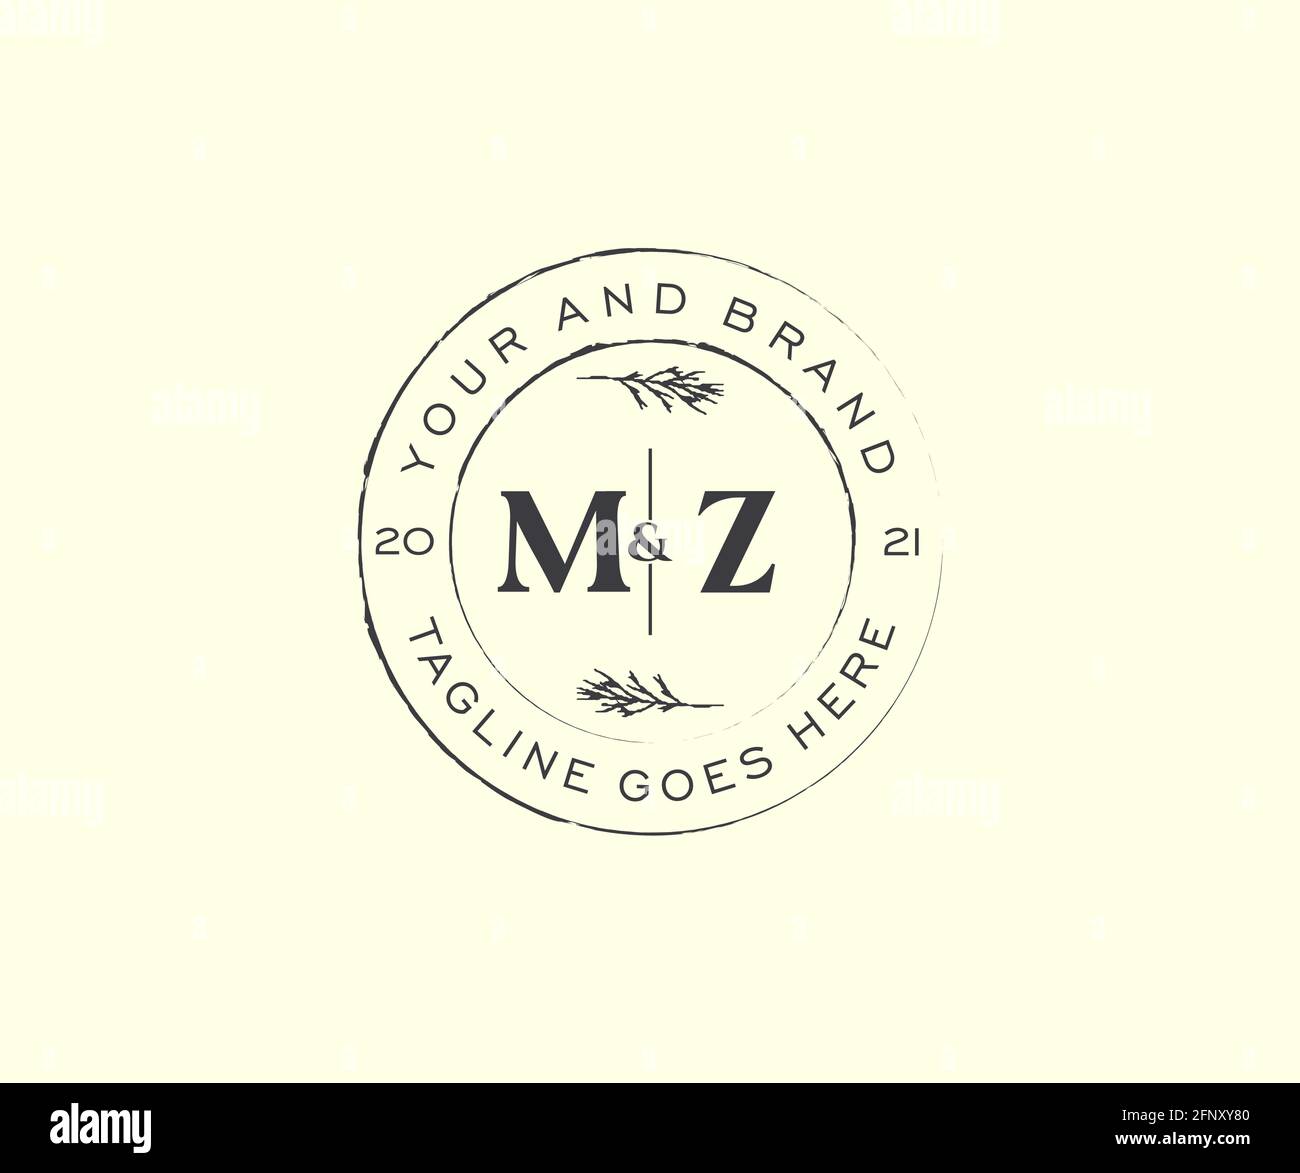 MZ Logo (v1) | Greeting Card